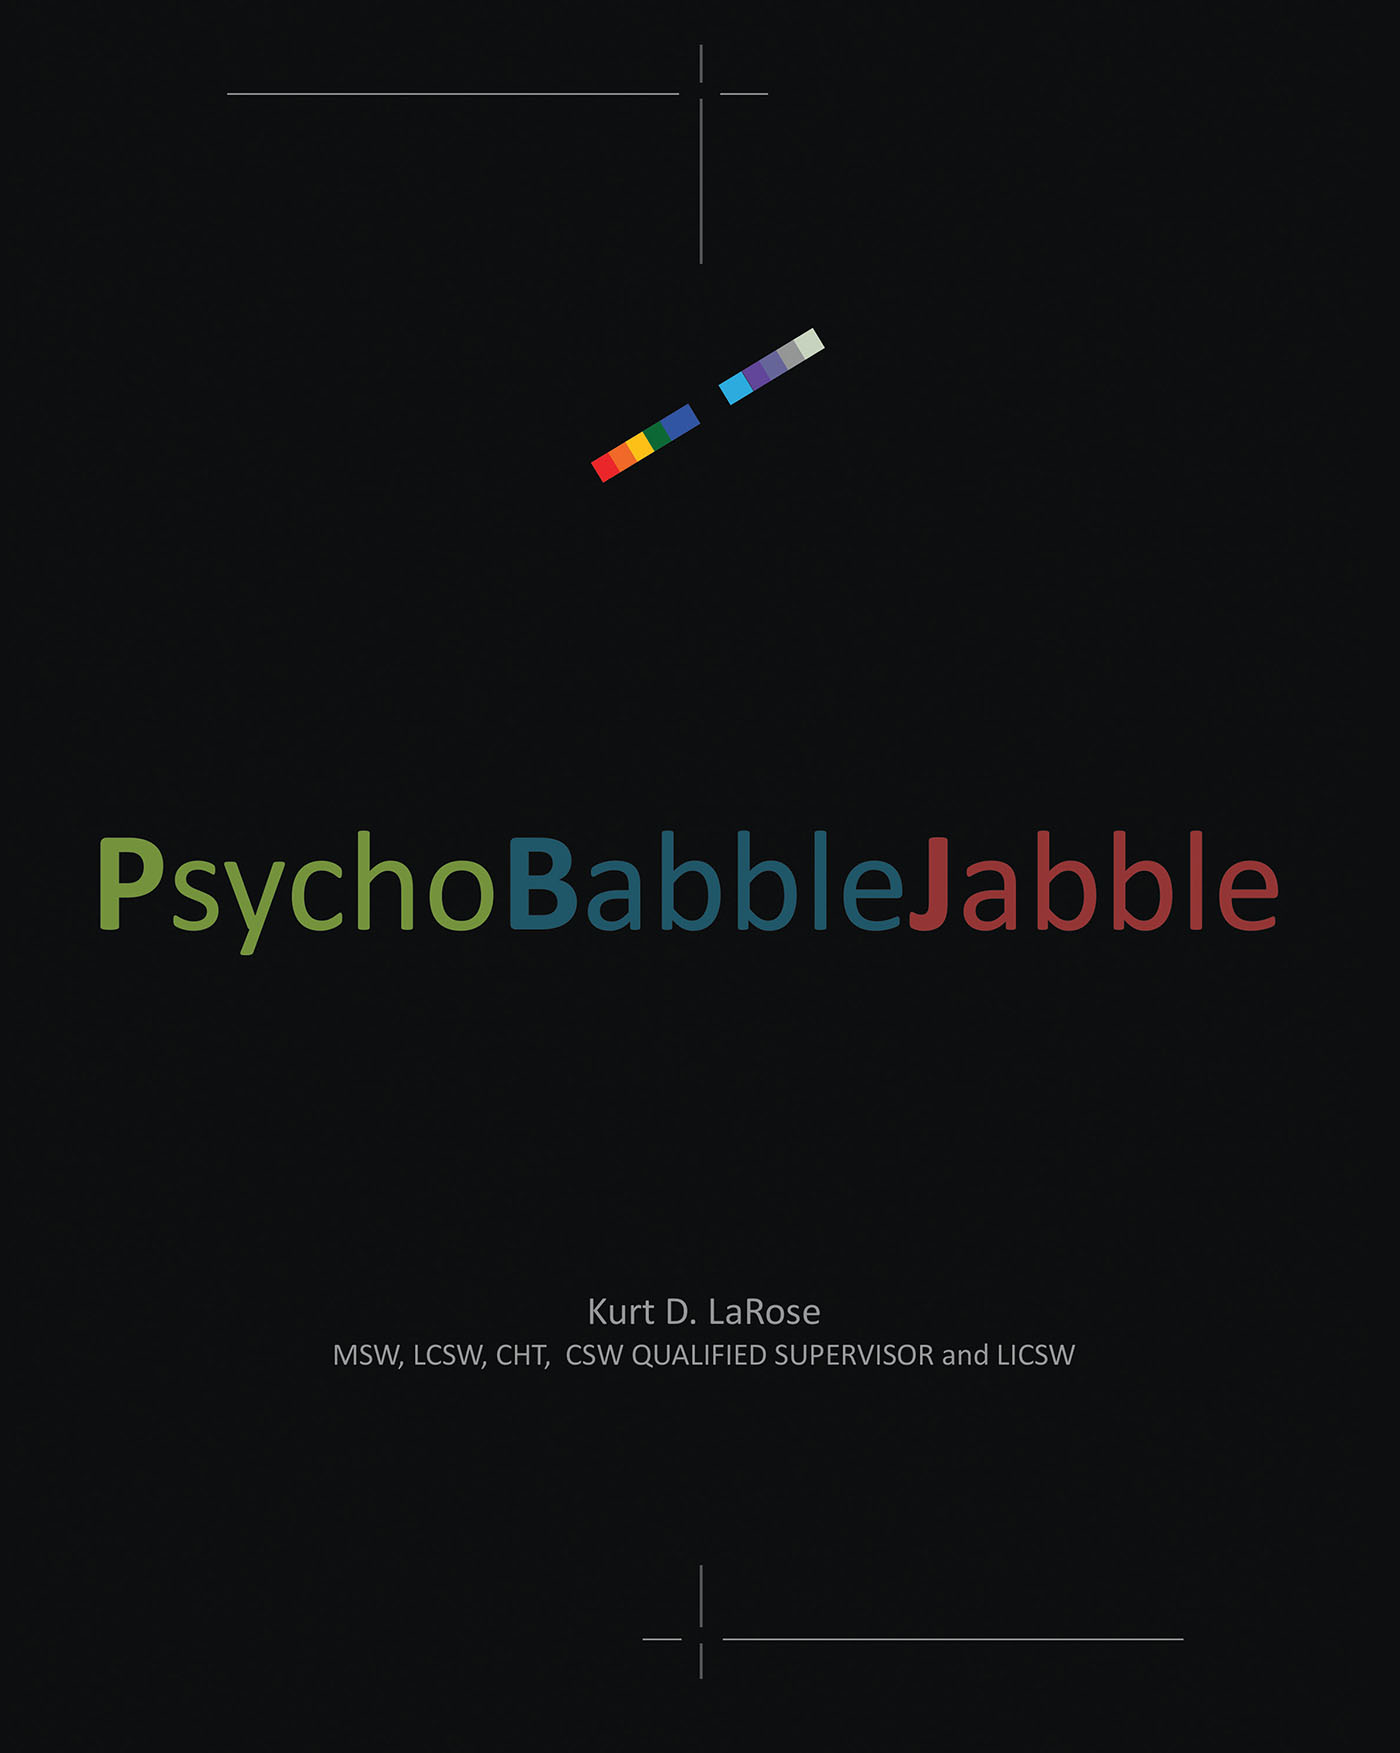 PsychoBabbleJabble Cover Image